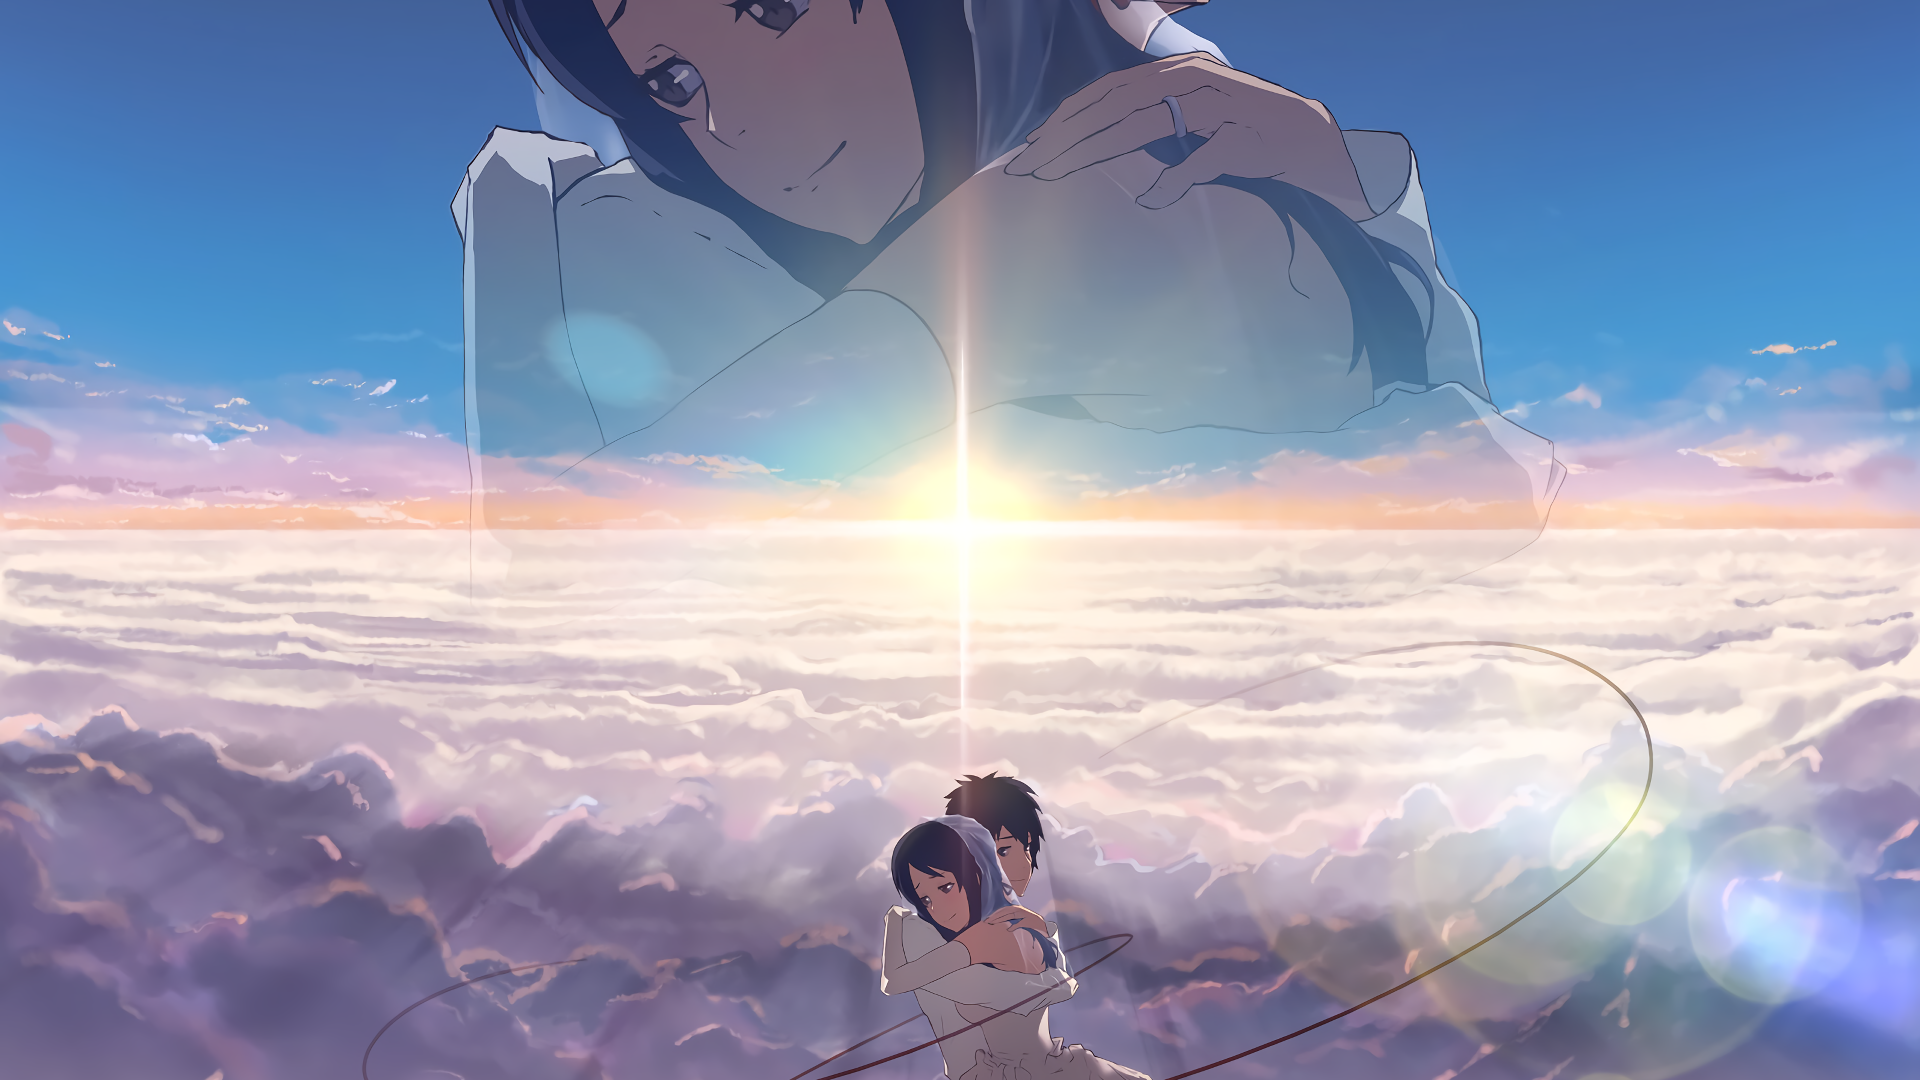 Desktop Wallpaper Mitsuha Miyamizu And Taki Tachibana Of Kimi No Na Wa.  Anime, Hd Image, Picture, Background, 3 Dgx6